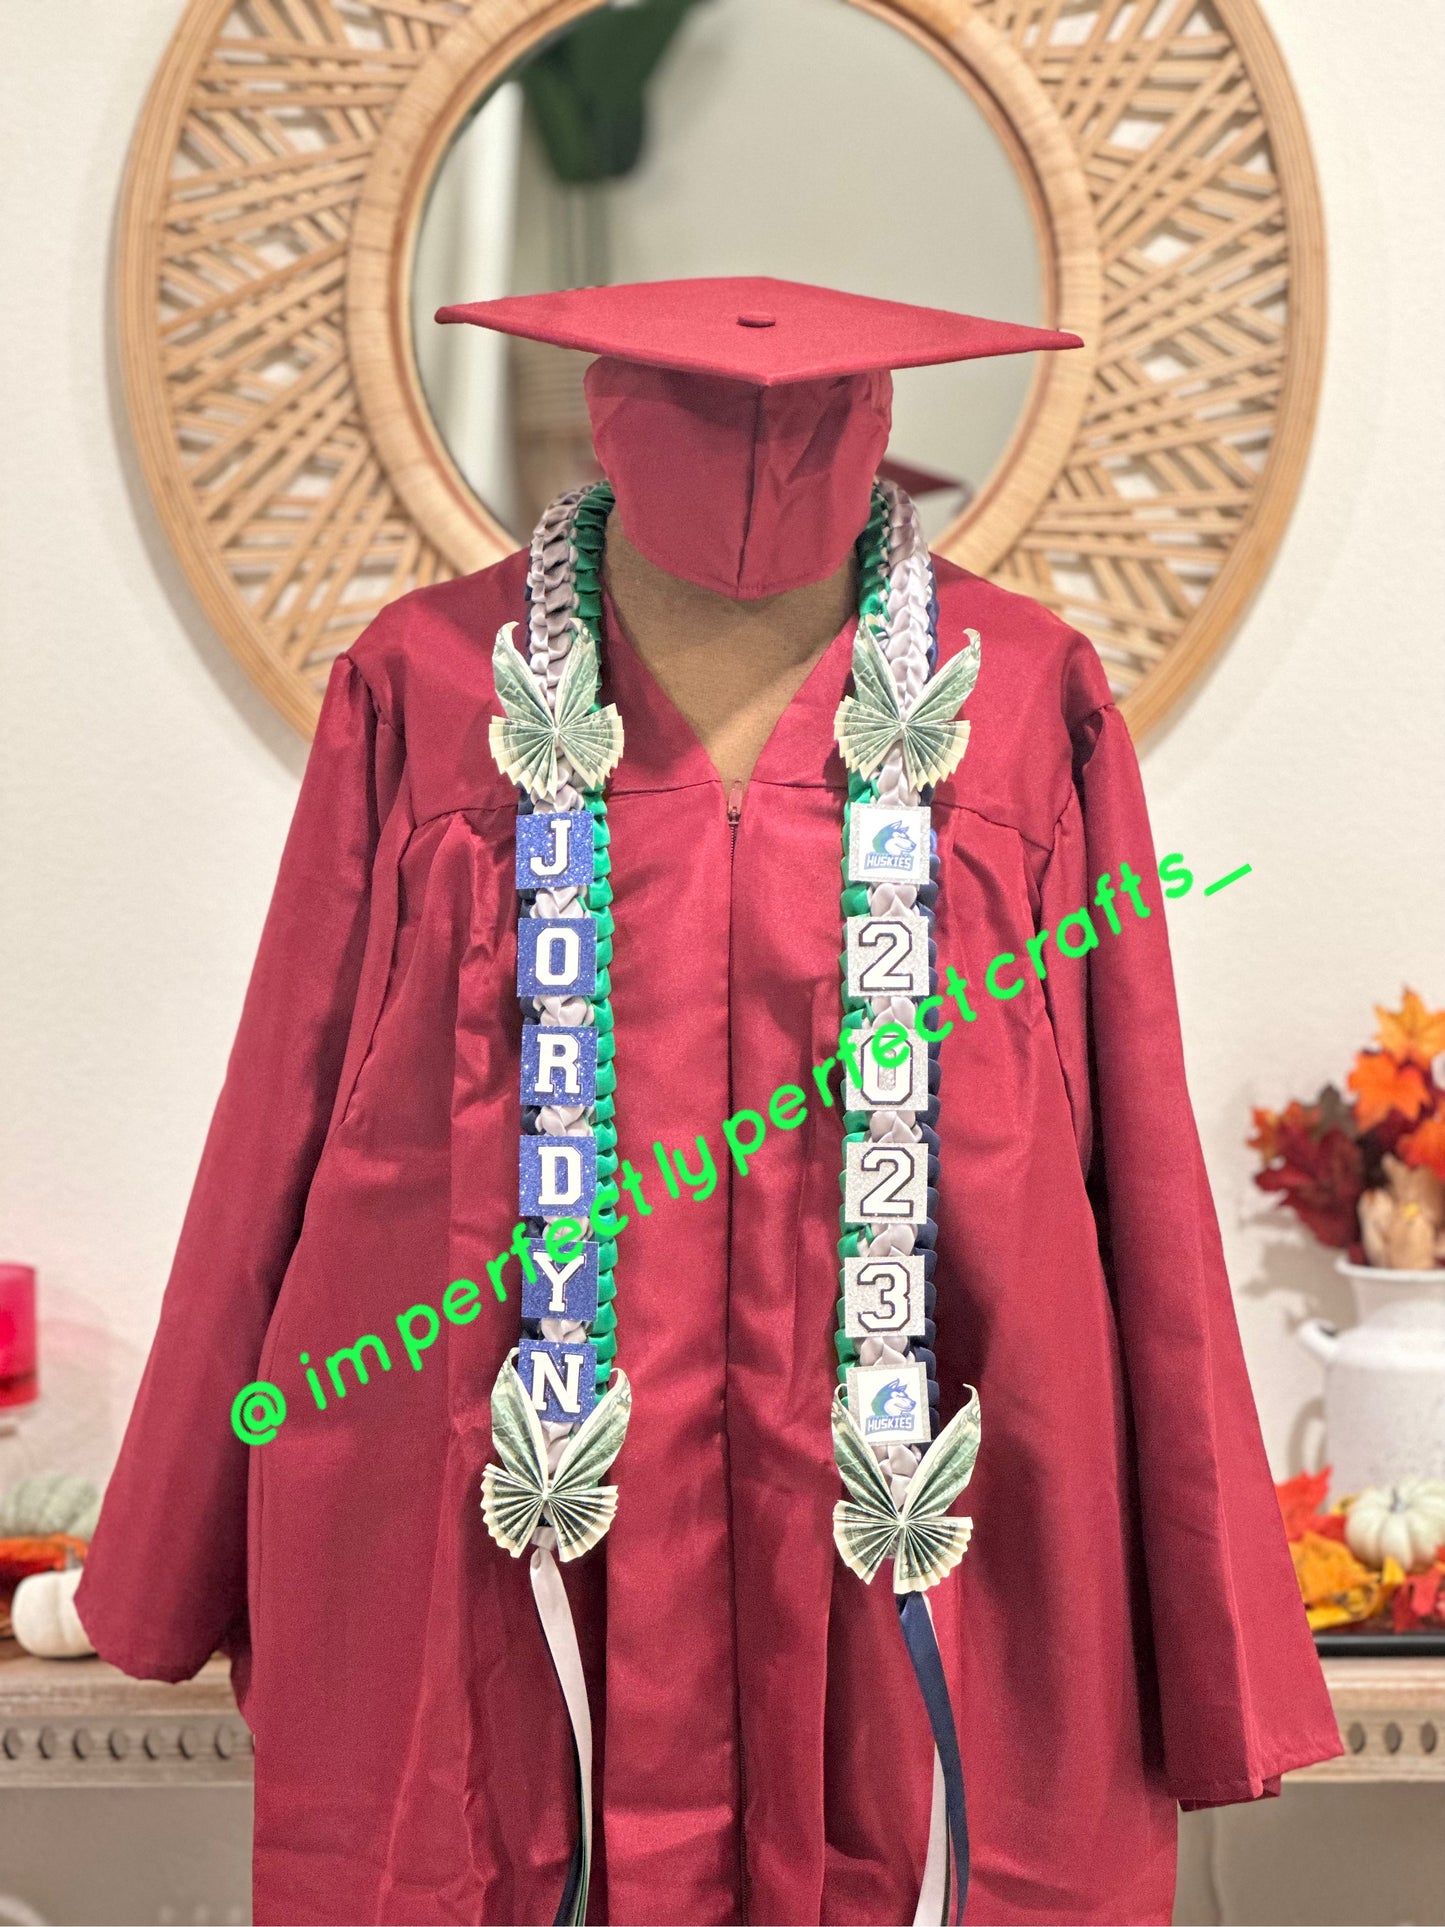 Graduation / Promotion Lei - Option 11